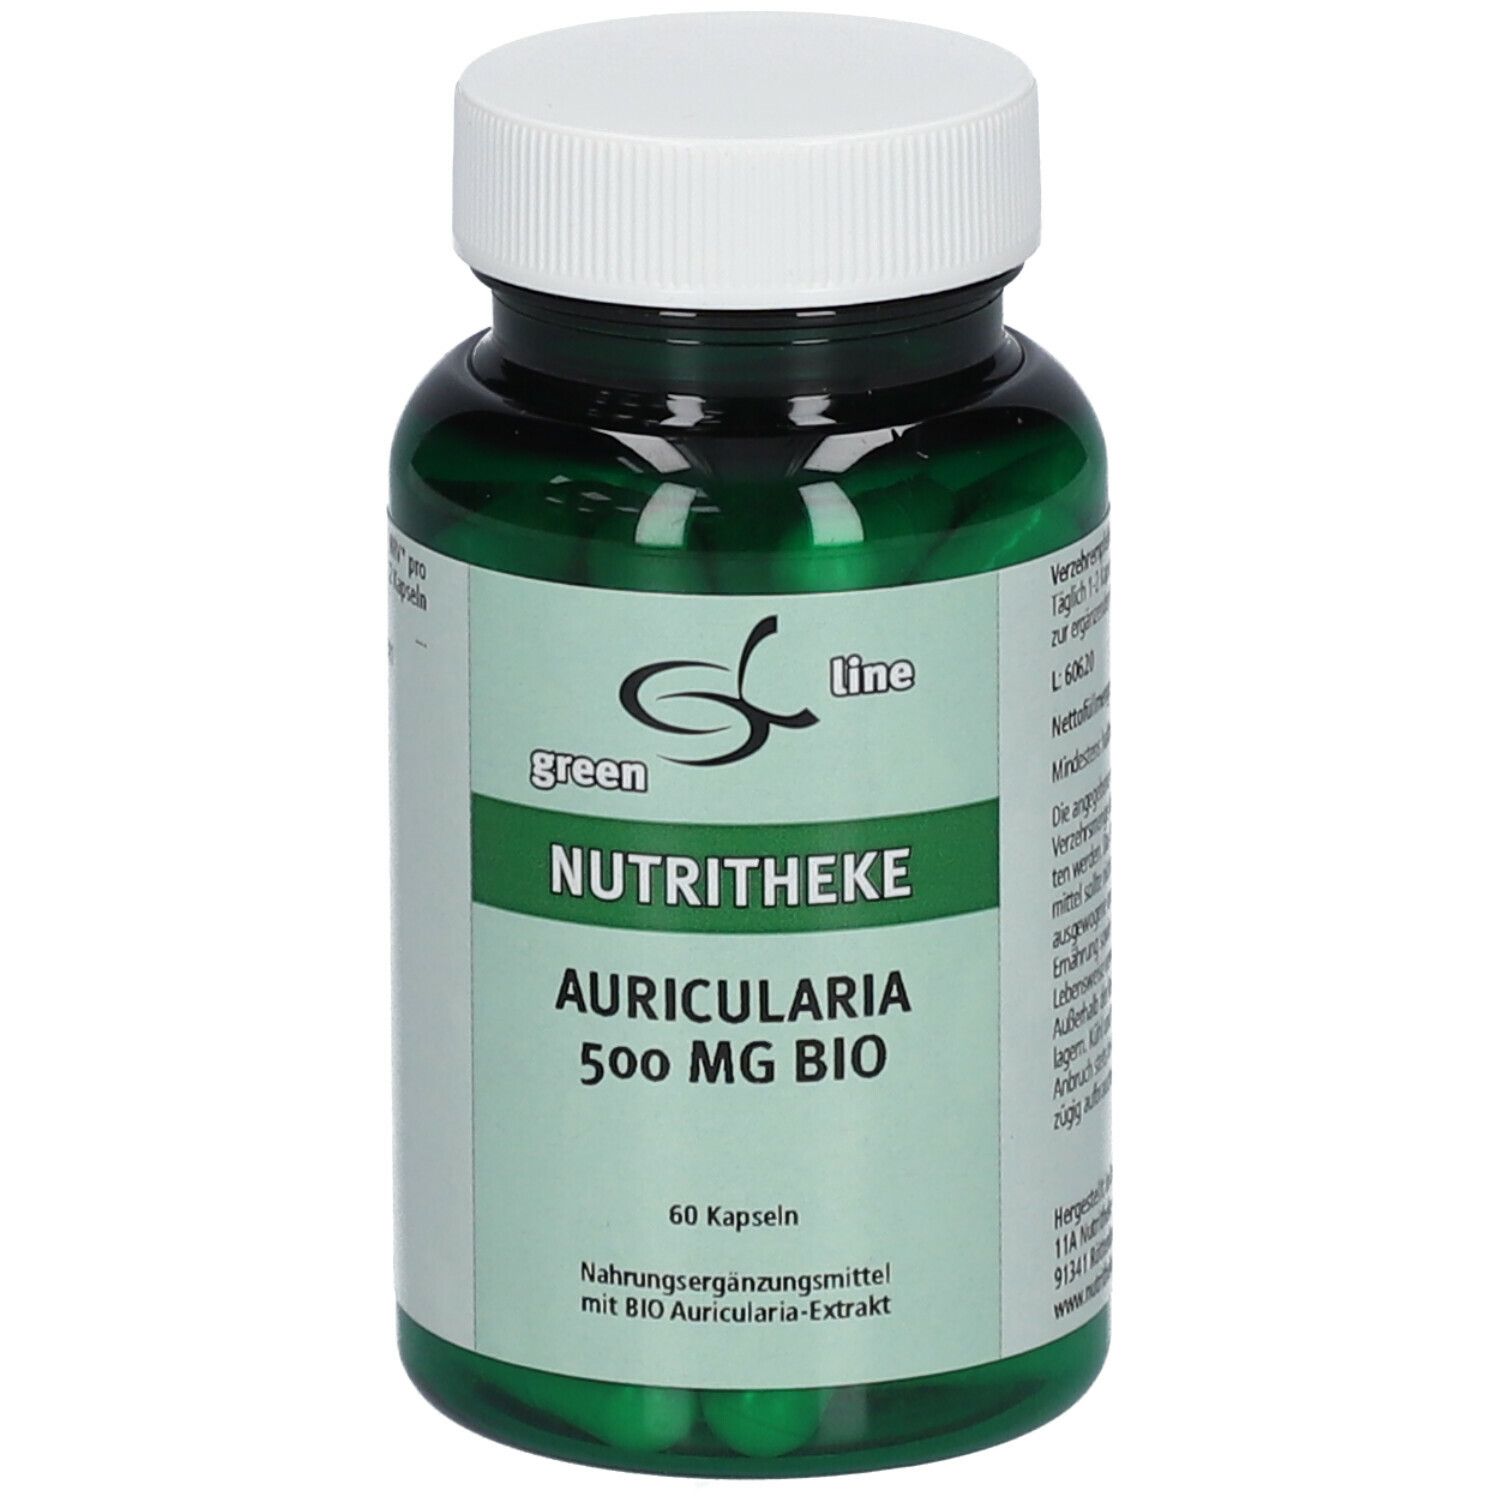 Image of green line AURICULARIA 500 mg BIO